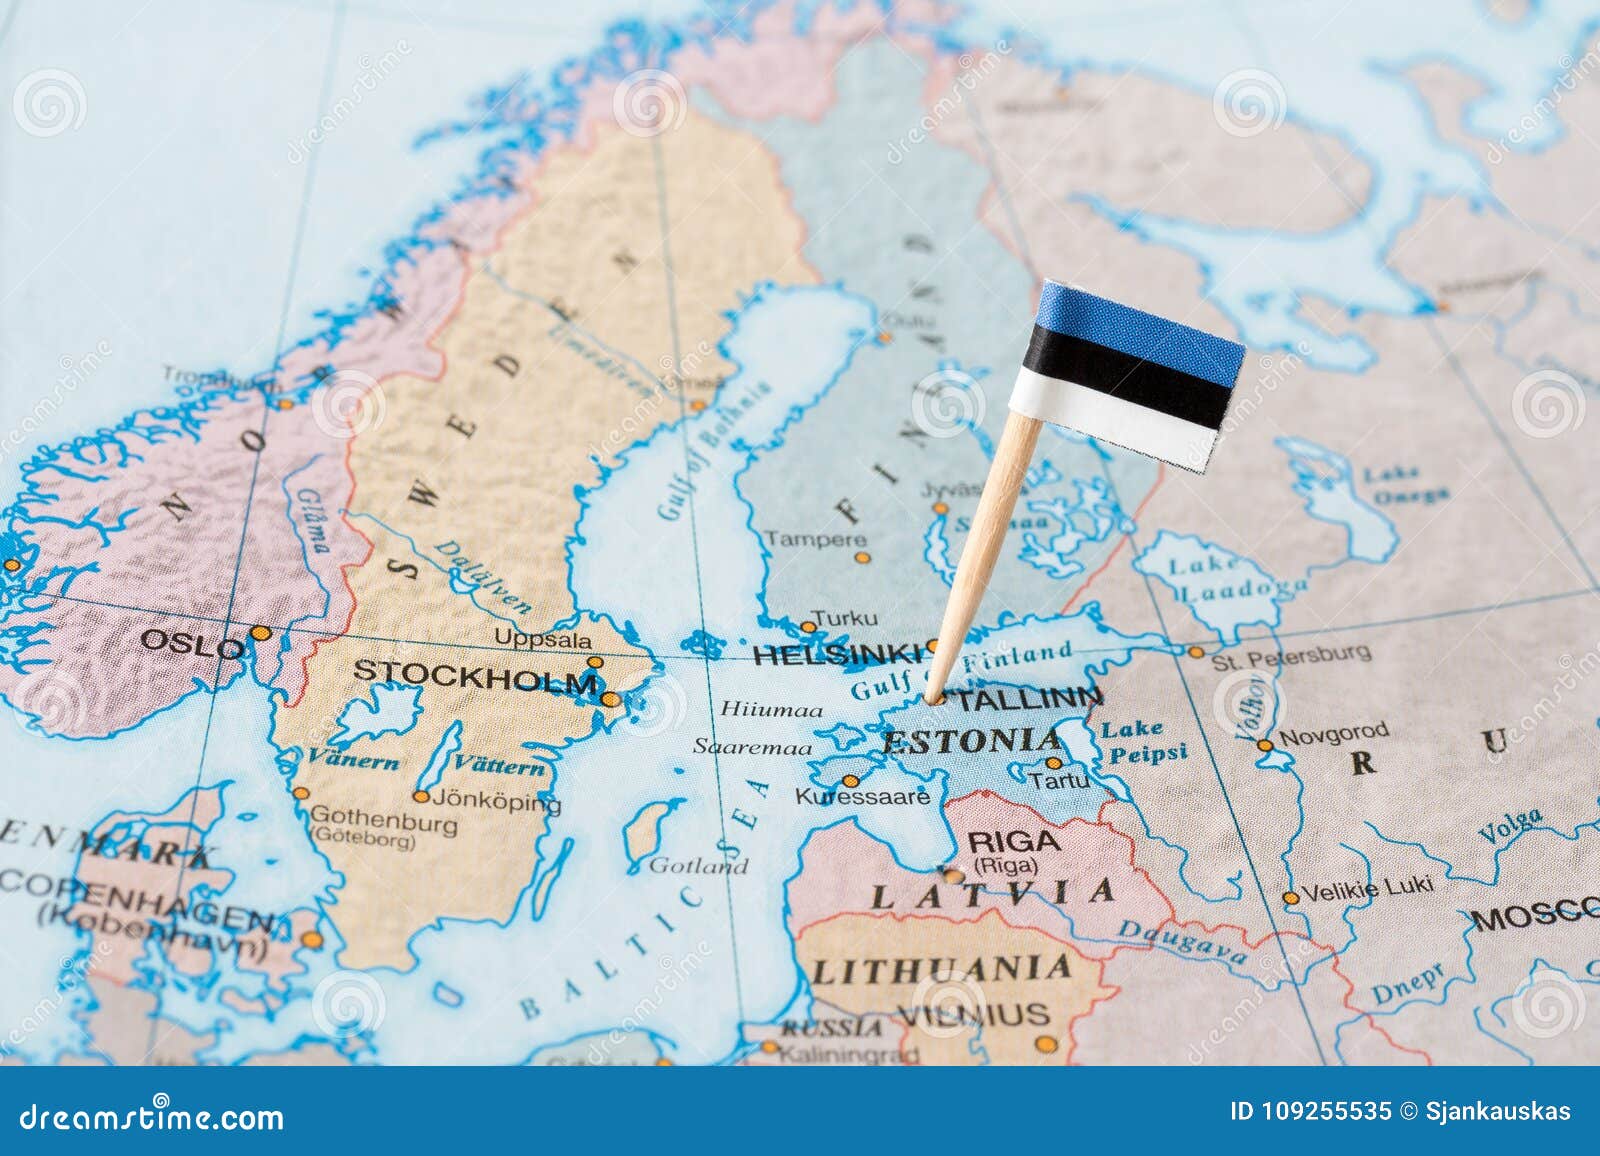 estonia flag pin on map